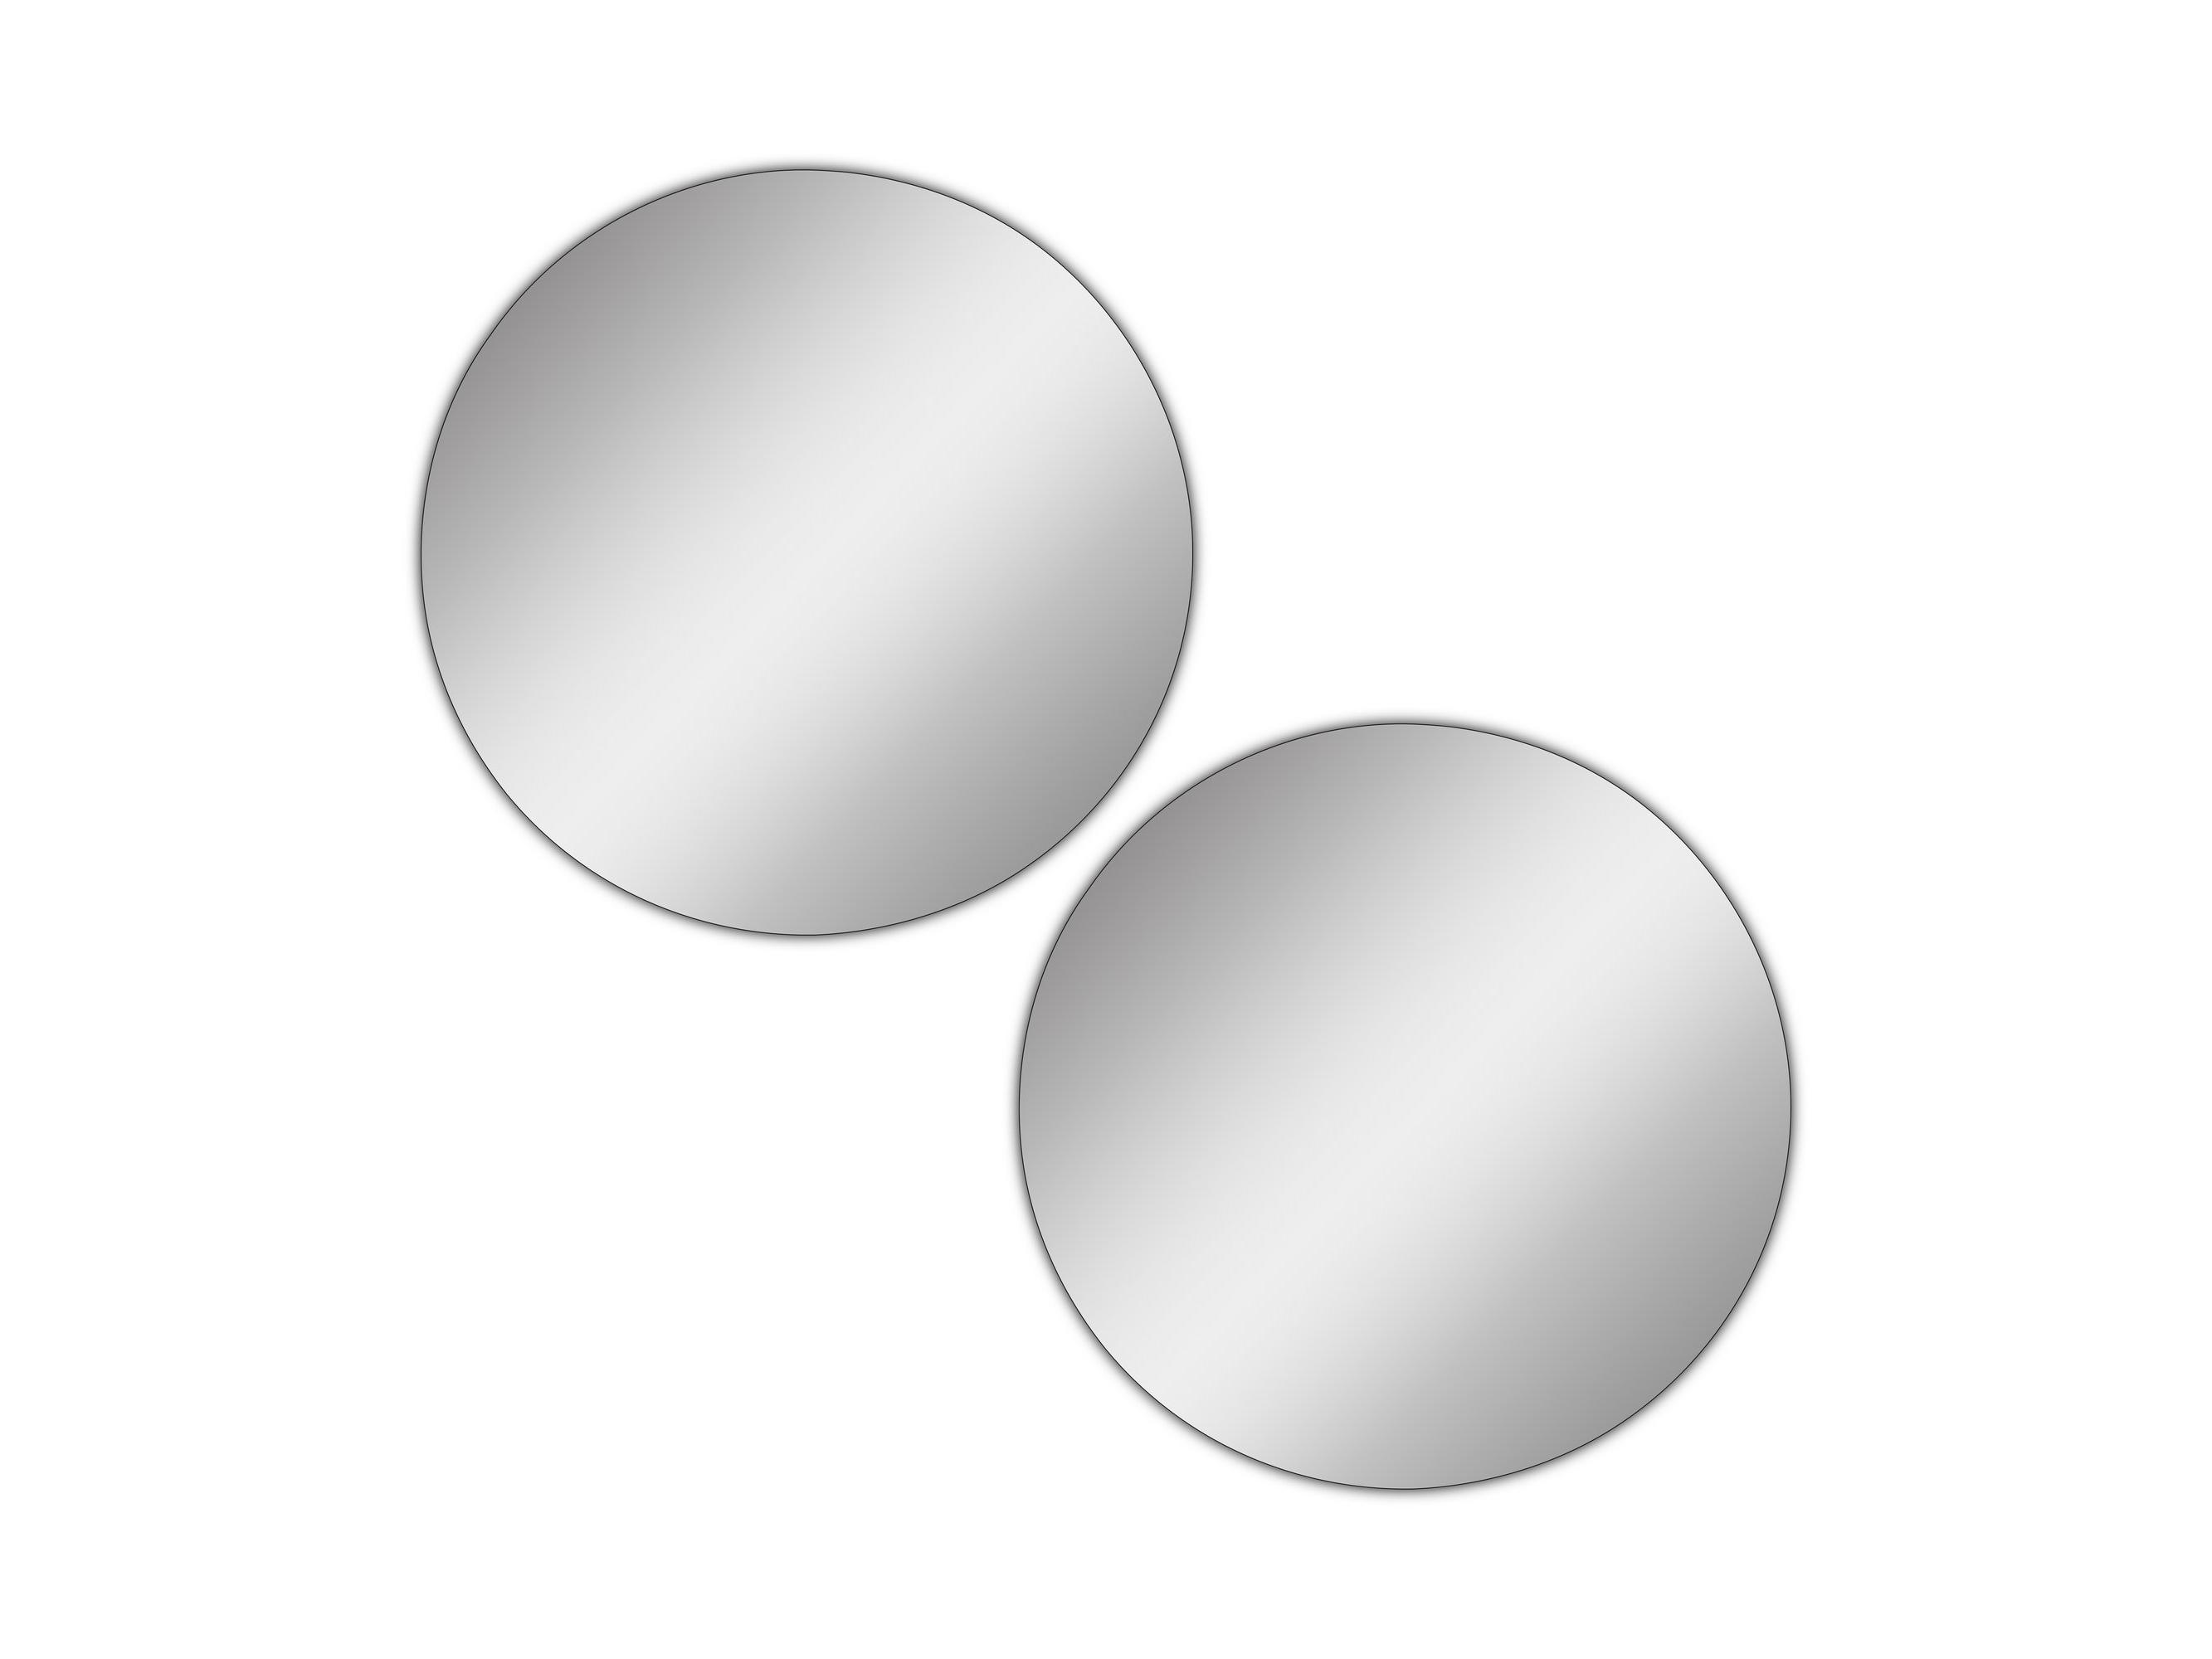  Zrcadlo Moluvu 5 (stříbrná)